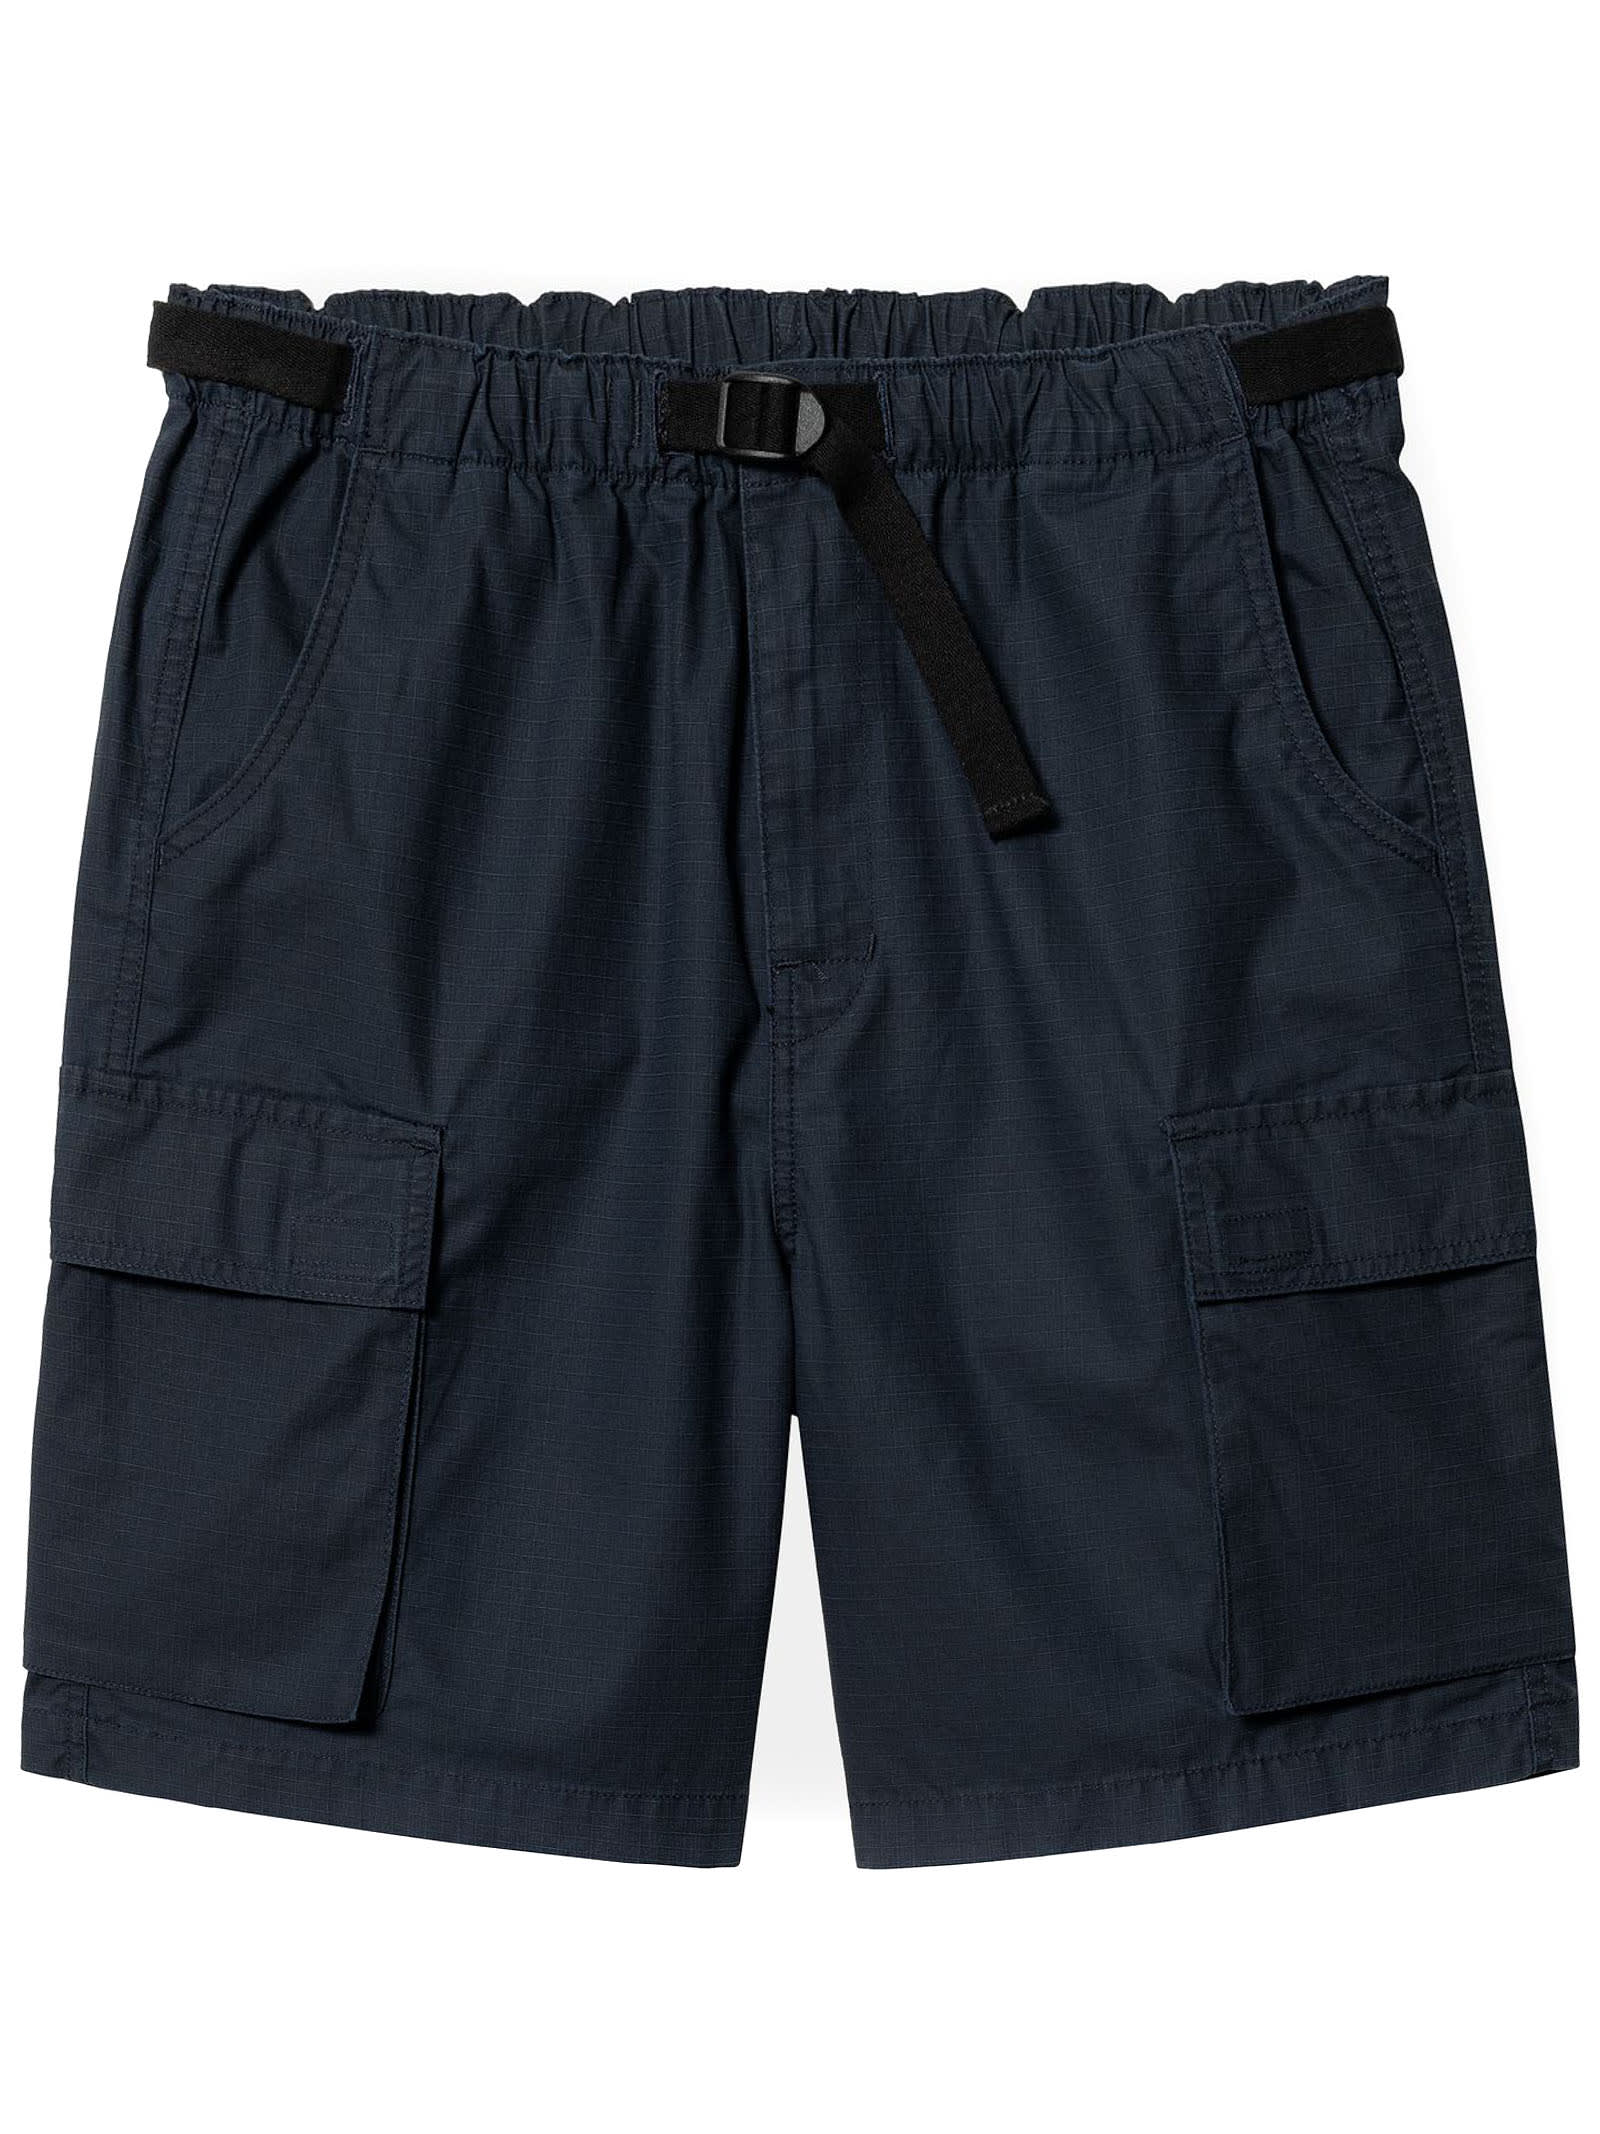 Carhartt Blue Cotton Cargo Shorts